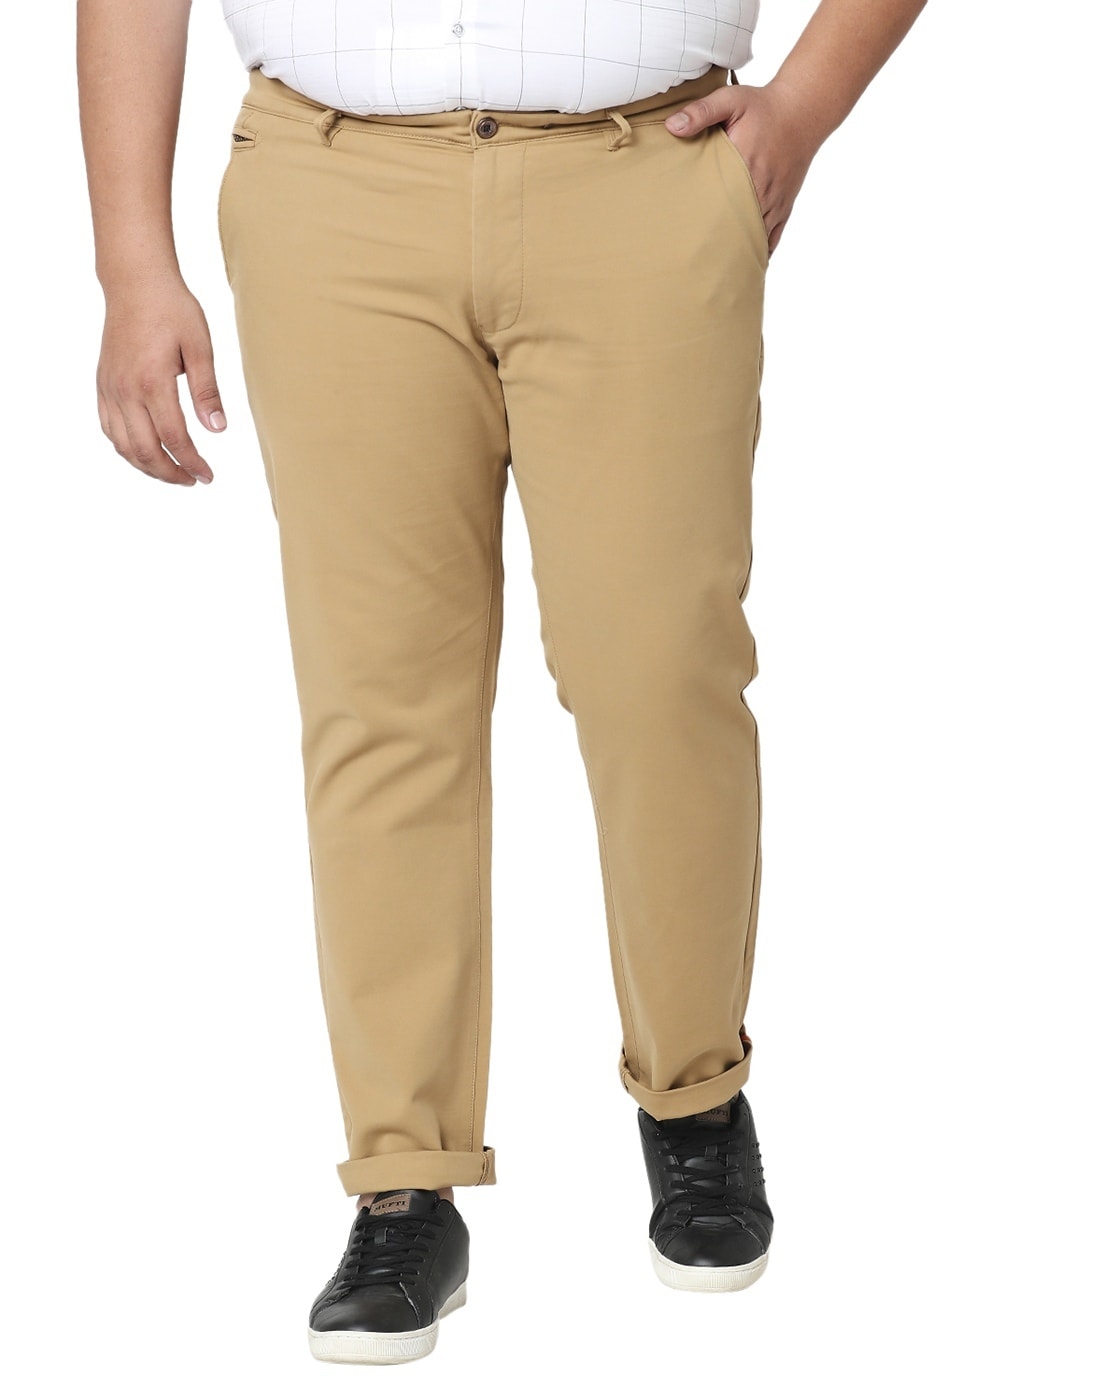 Sixth Element light grey cotton casual trouser  G3MCT0555  G3fashioncom